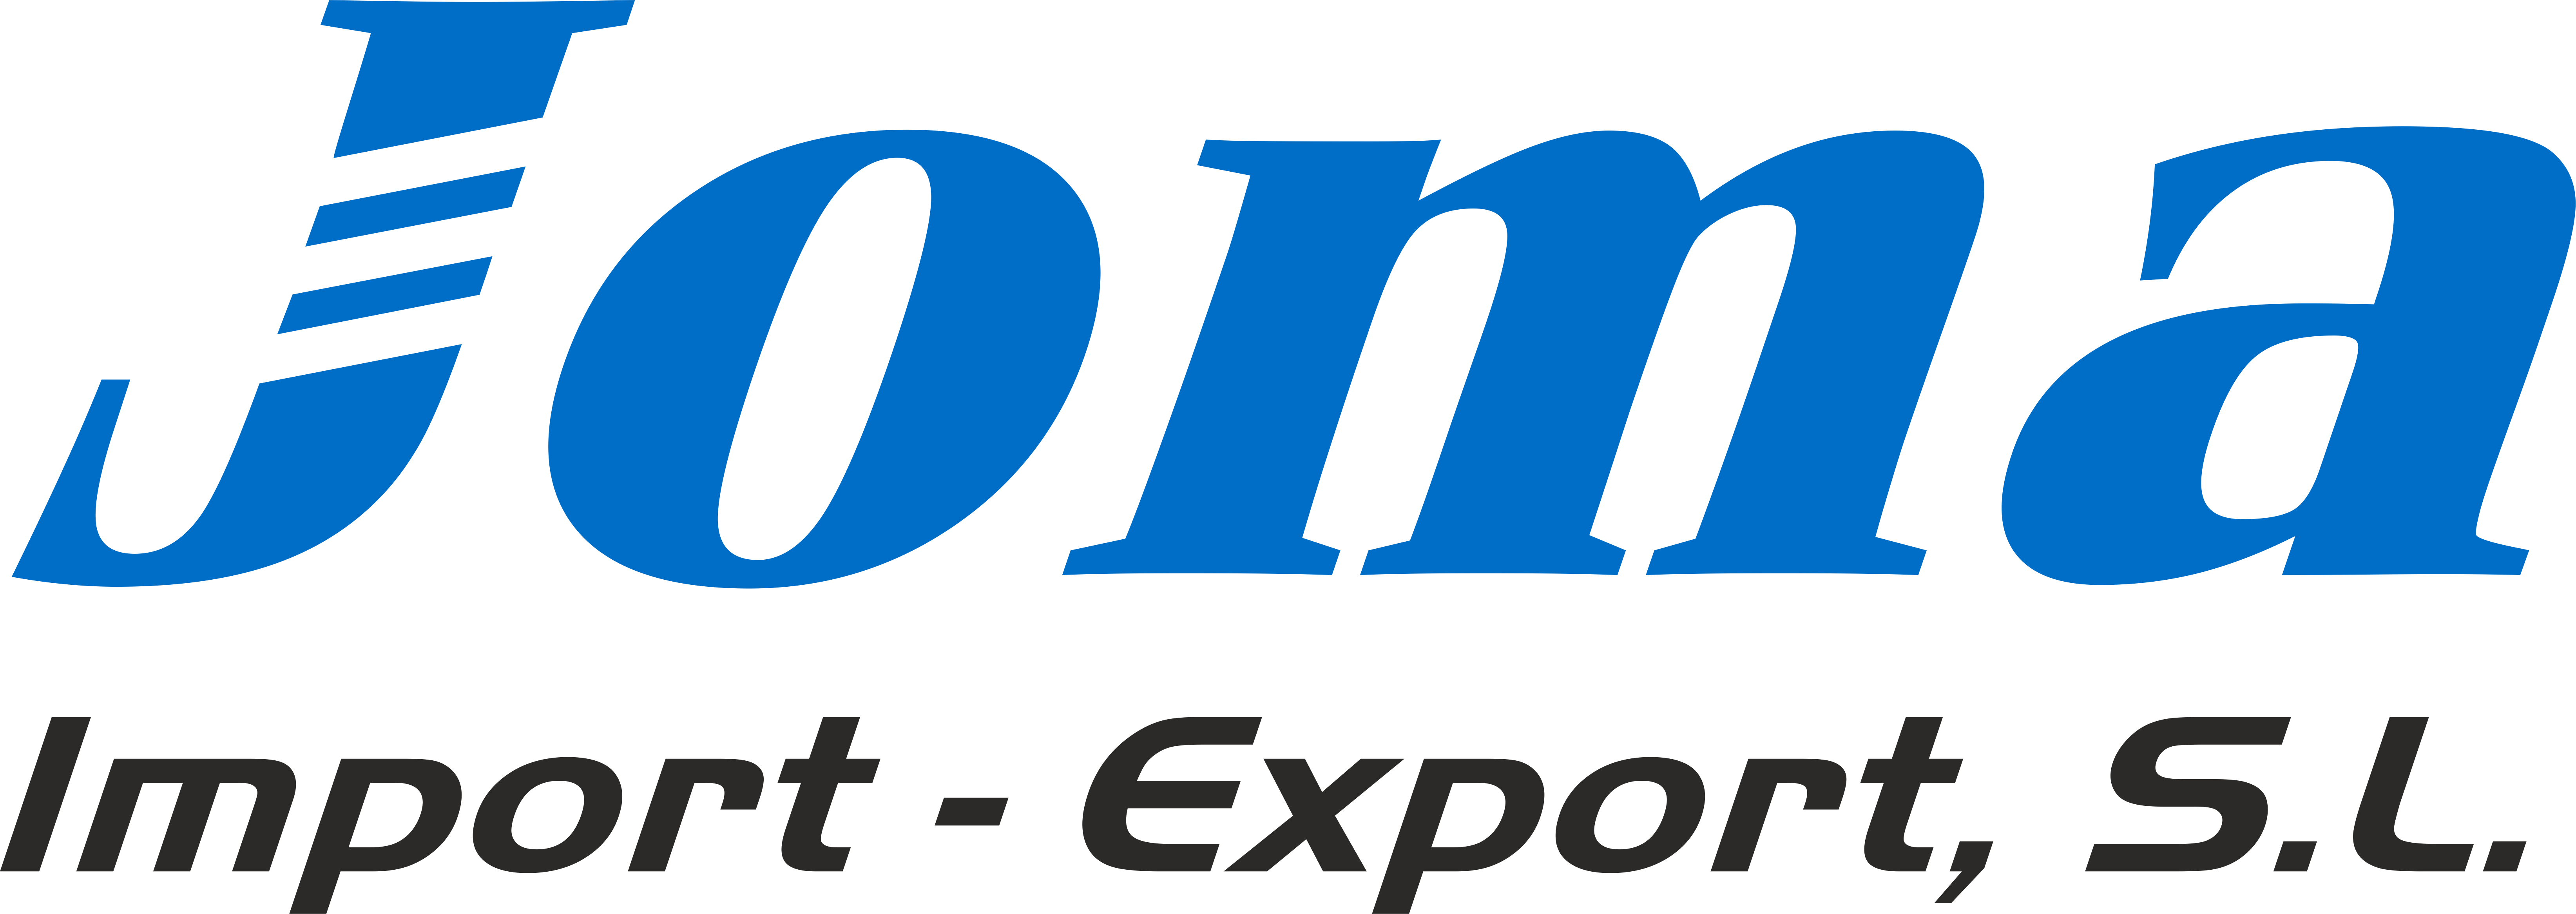 Joma Import-Export, S.L.